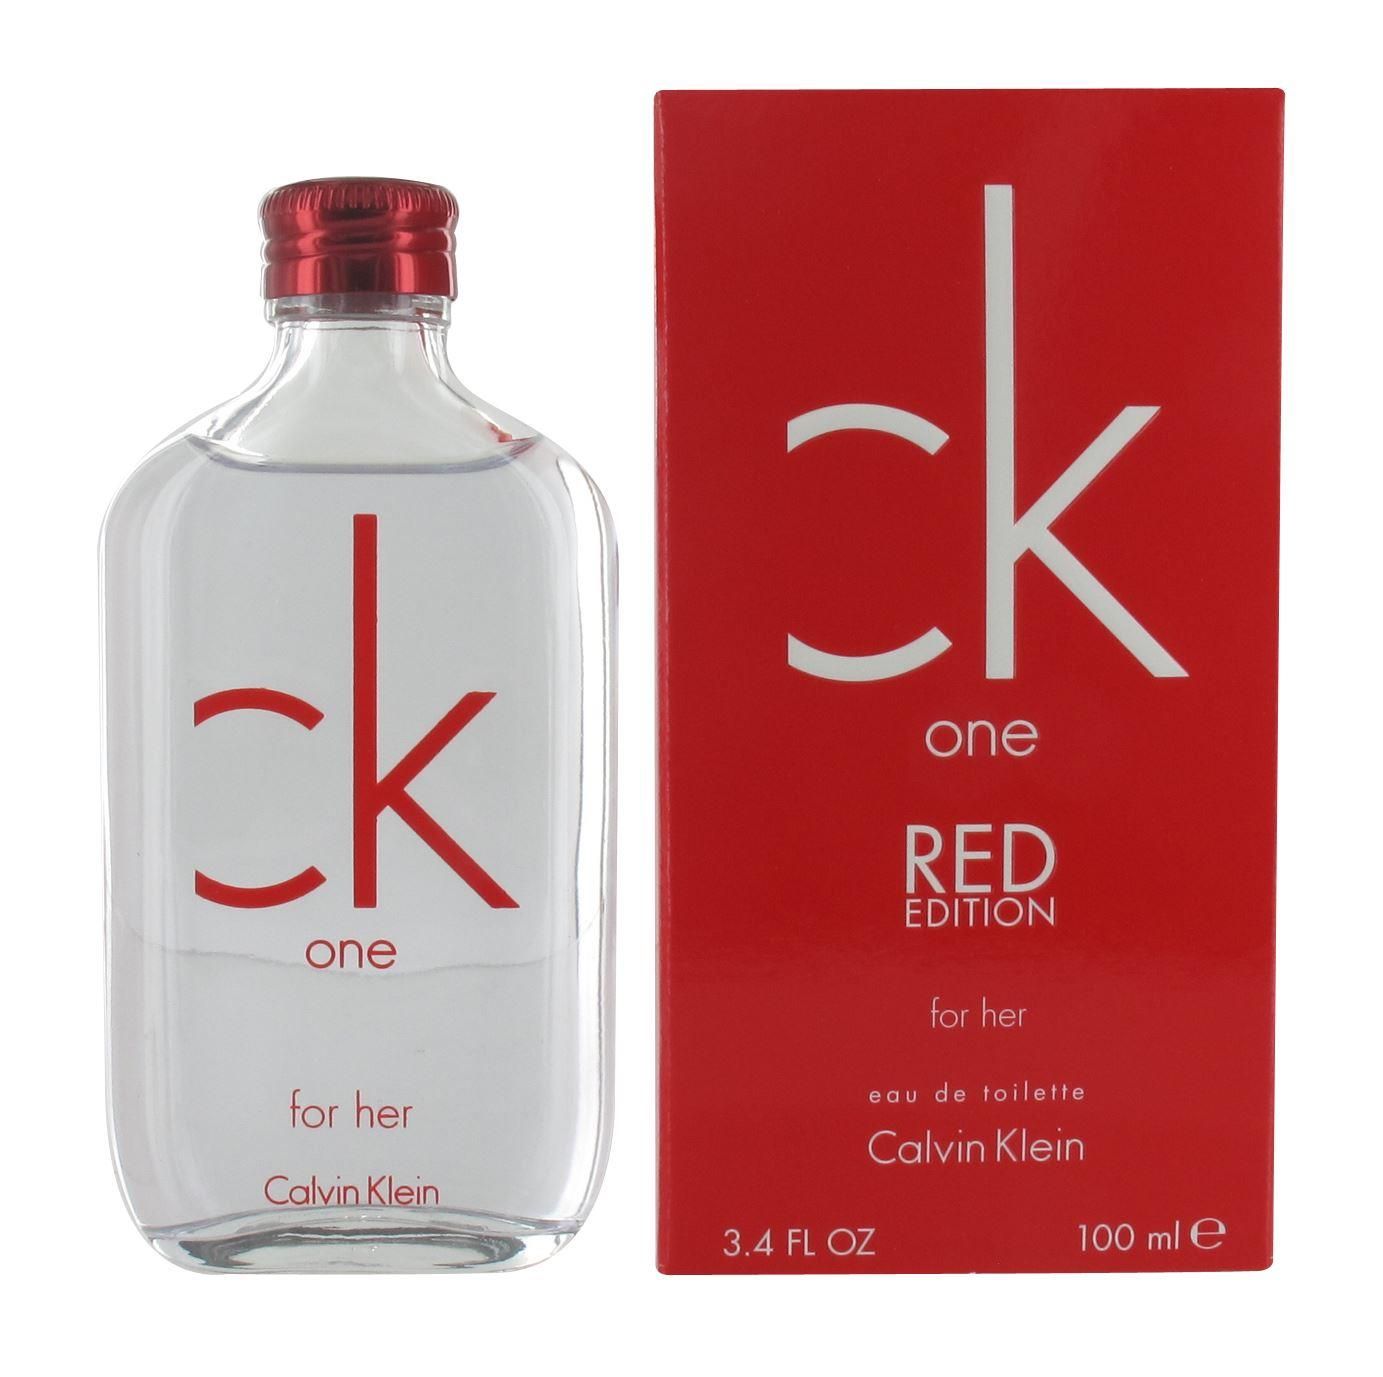 ck one ladies perfume